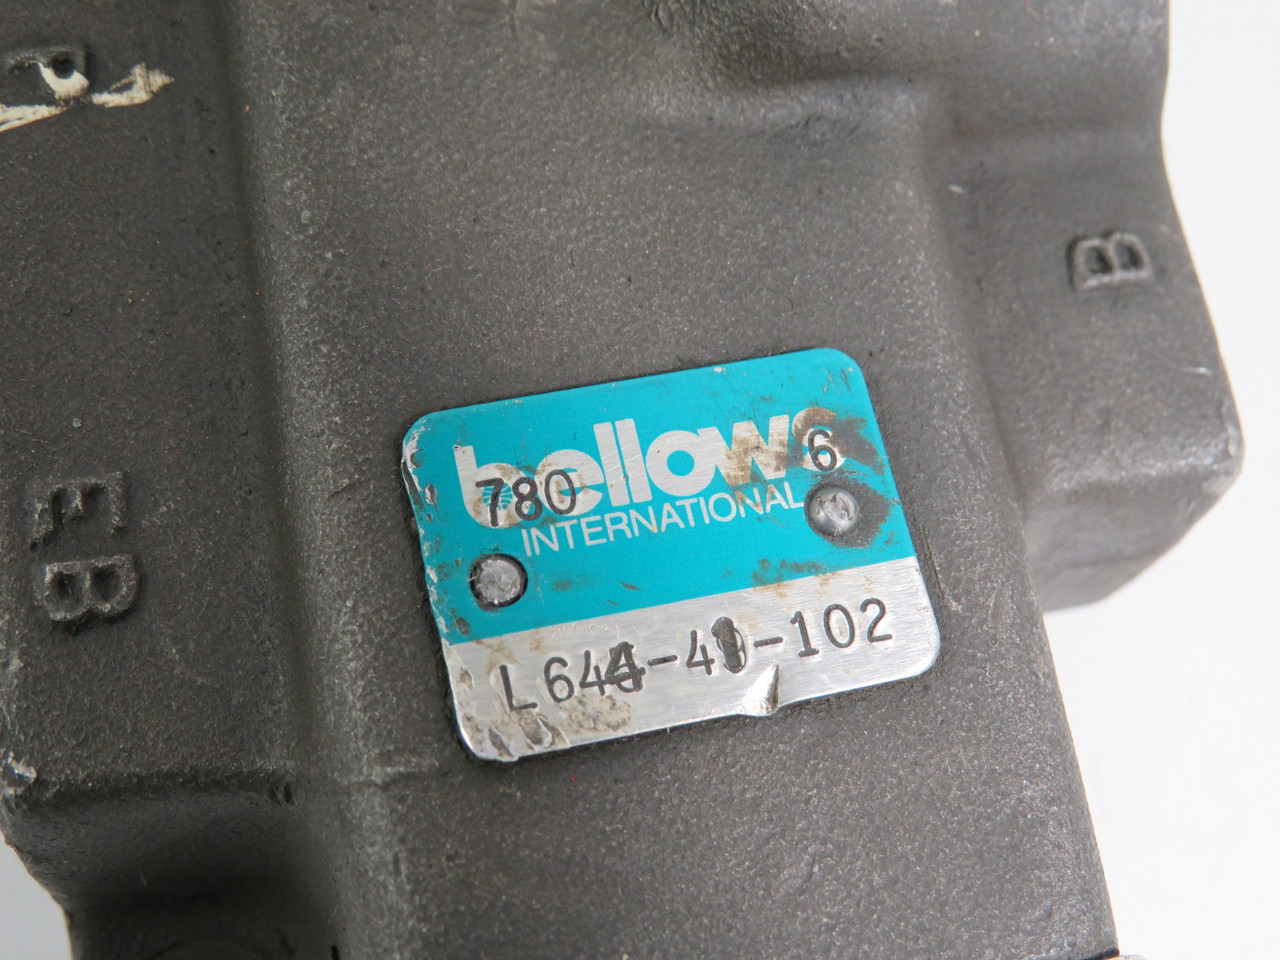 Bellows L644-41-102 Valve Block *Missing Hardware* USED